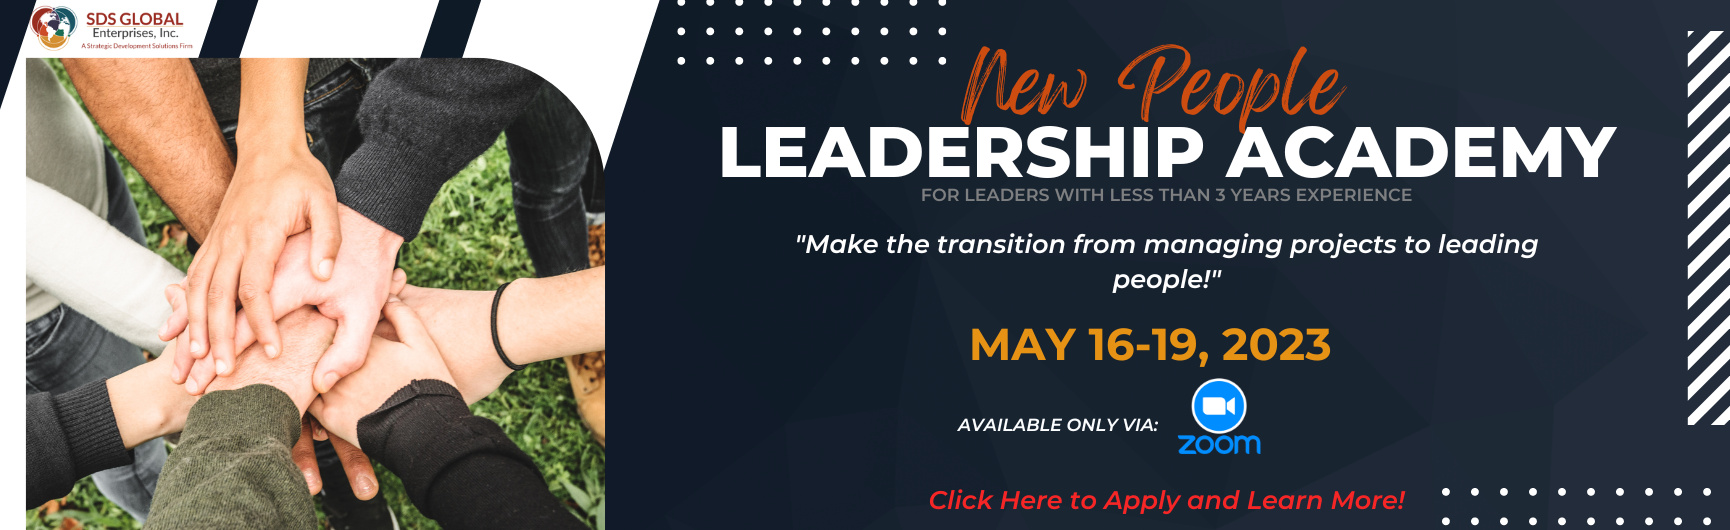 New People Leadership Academy